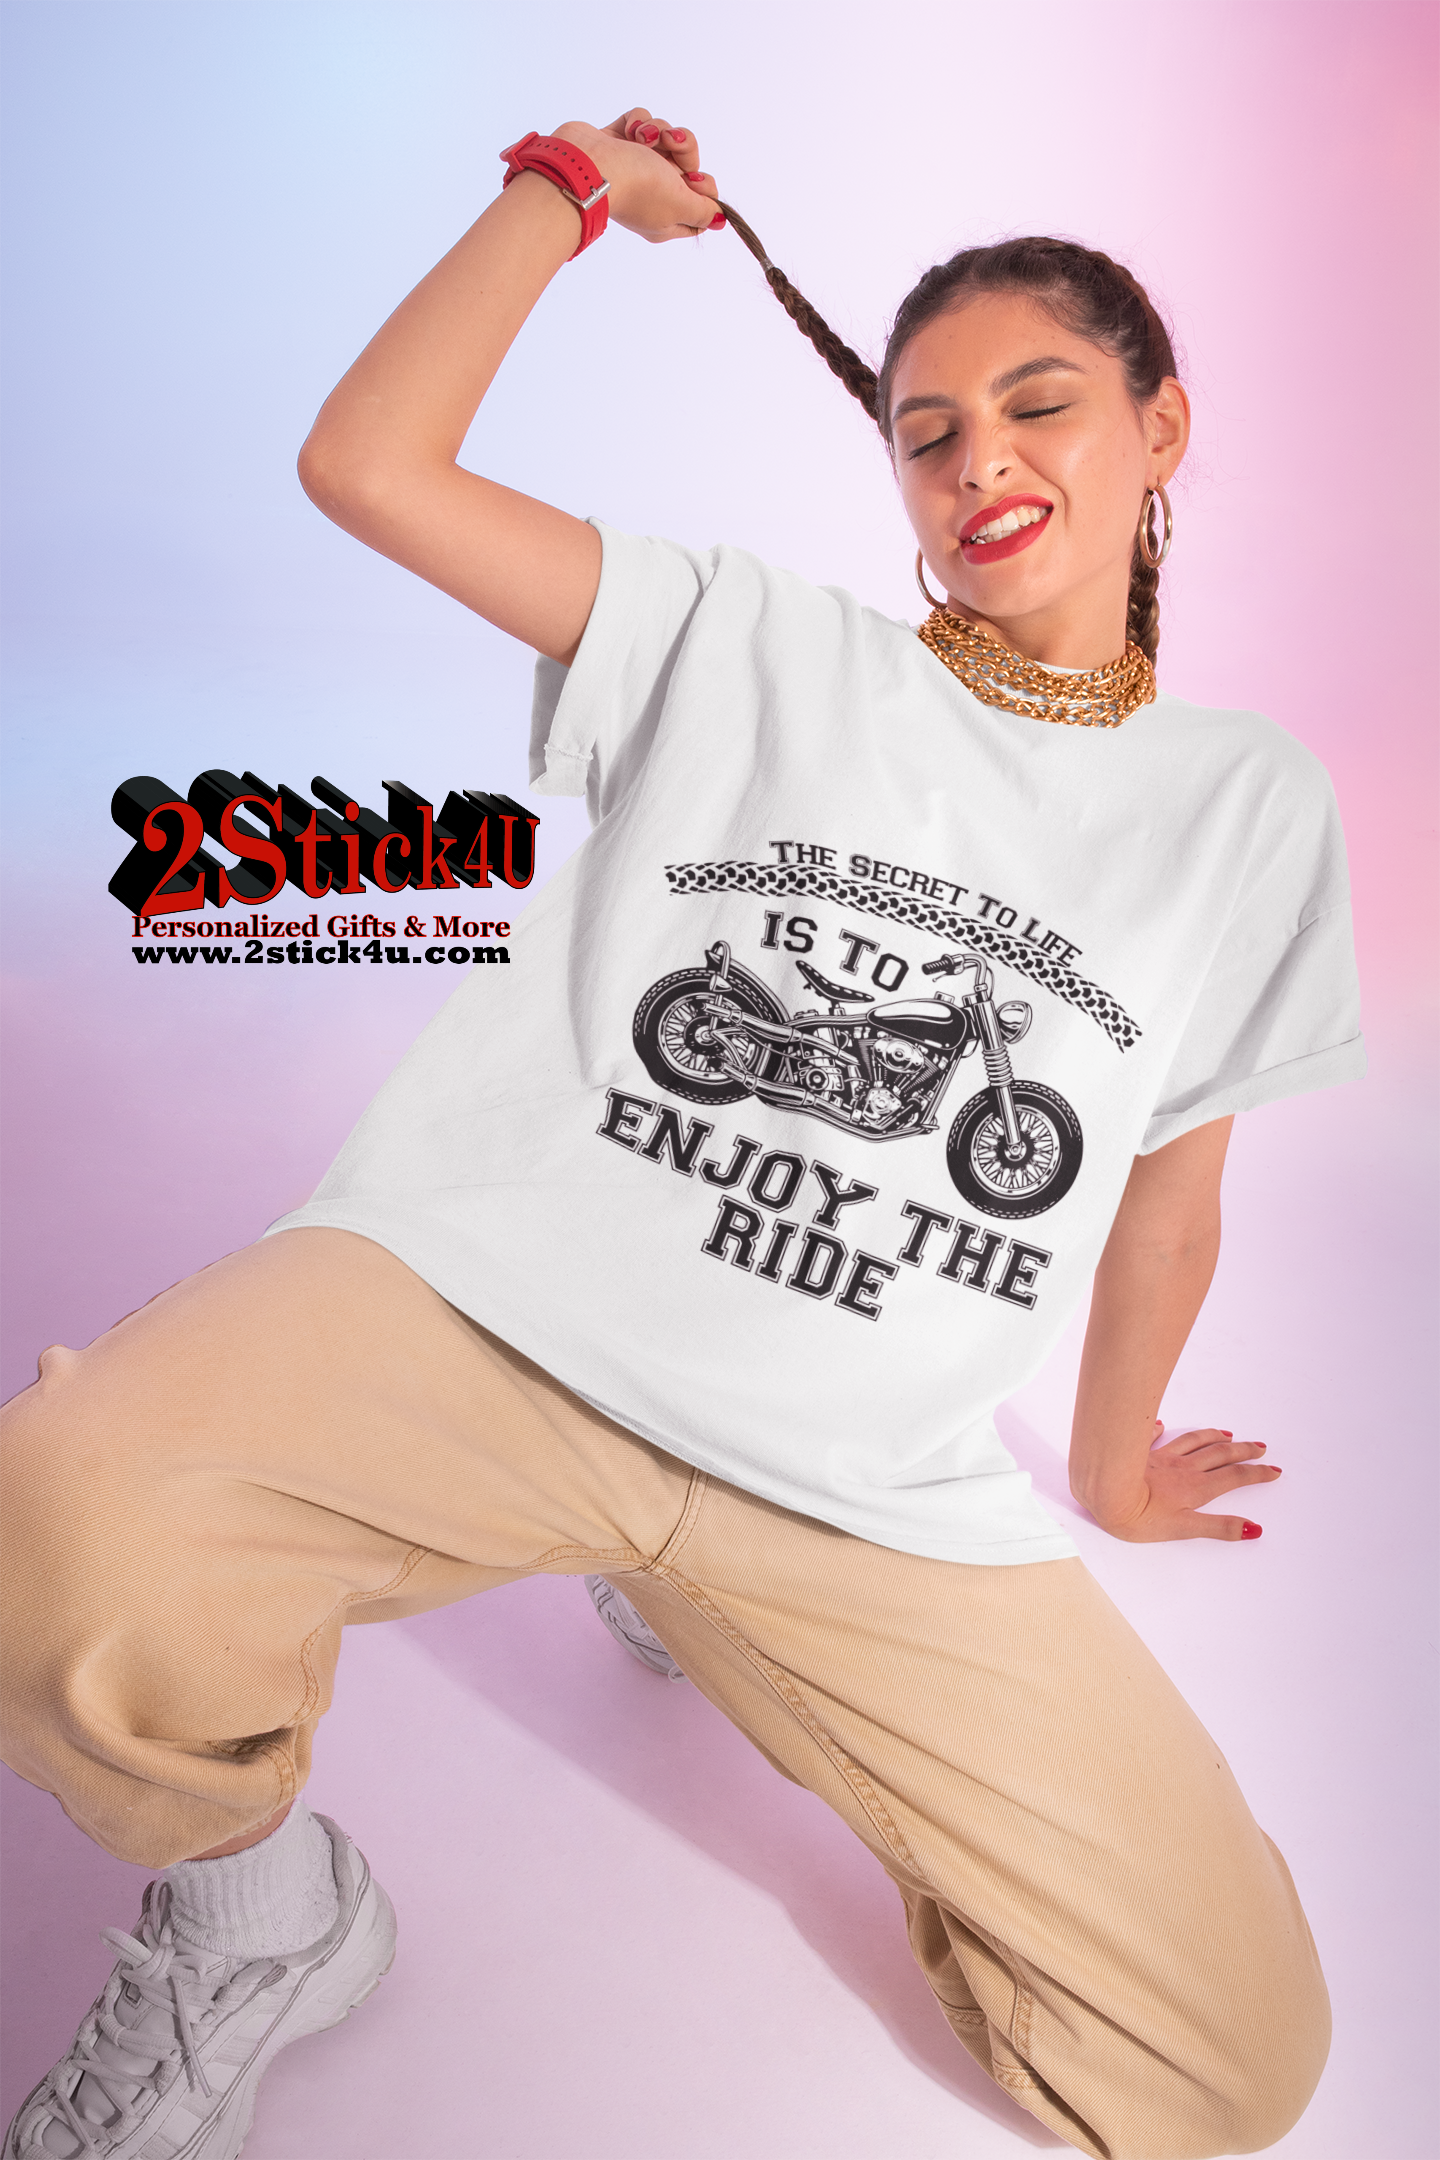 The Secret To Life T-Shirt, #ridingfree, Bikers T-Shirt, Customizable Performance Shirt